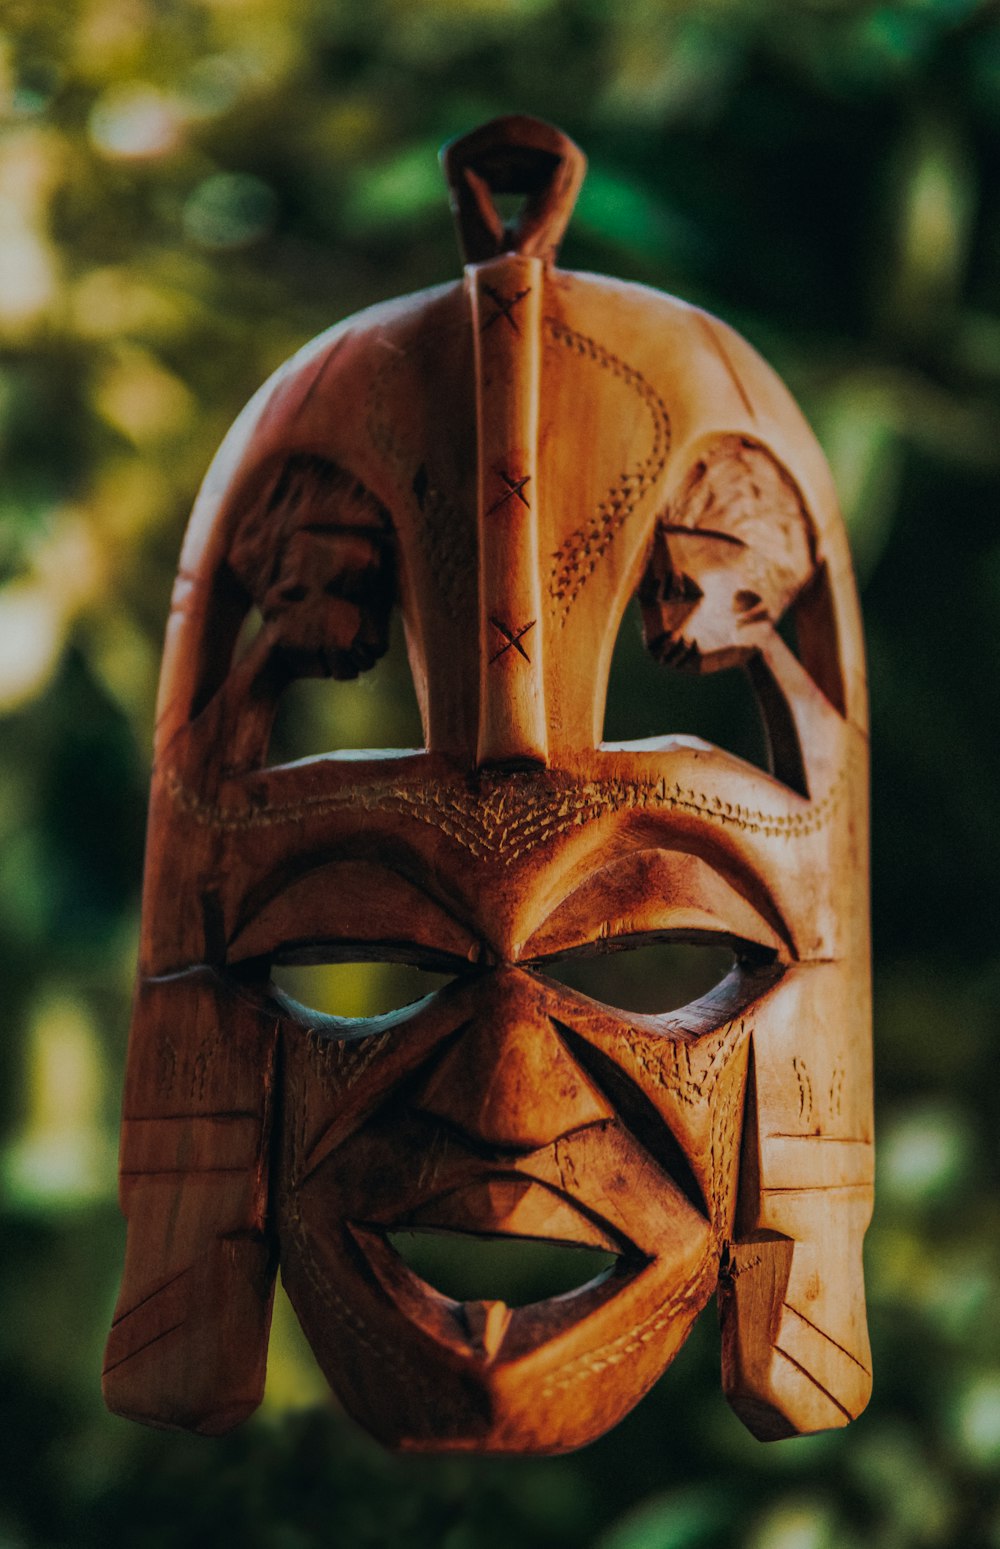 Tilt-Shift-Objektivfotografie der braunen Holzmaske